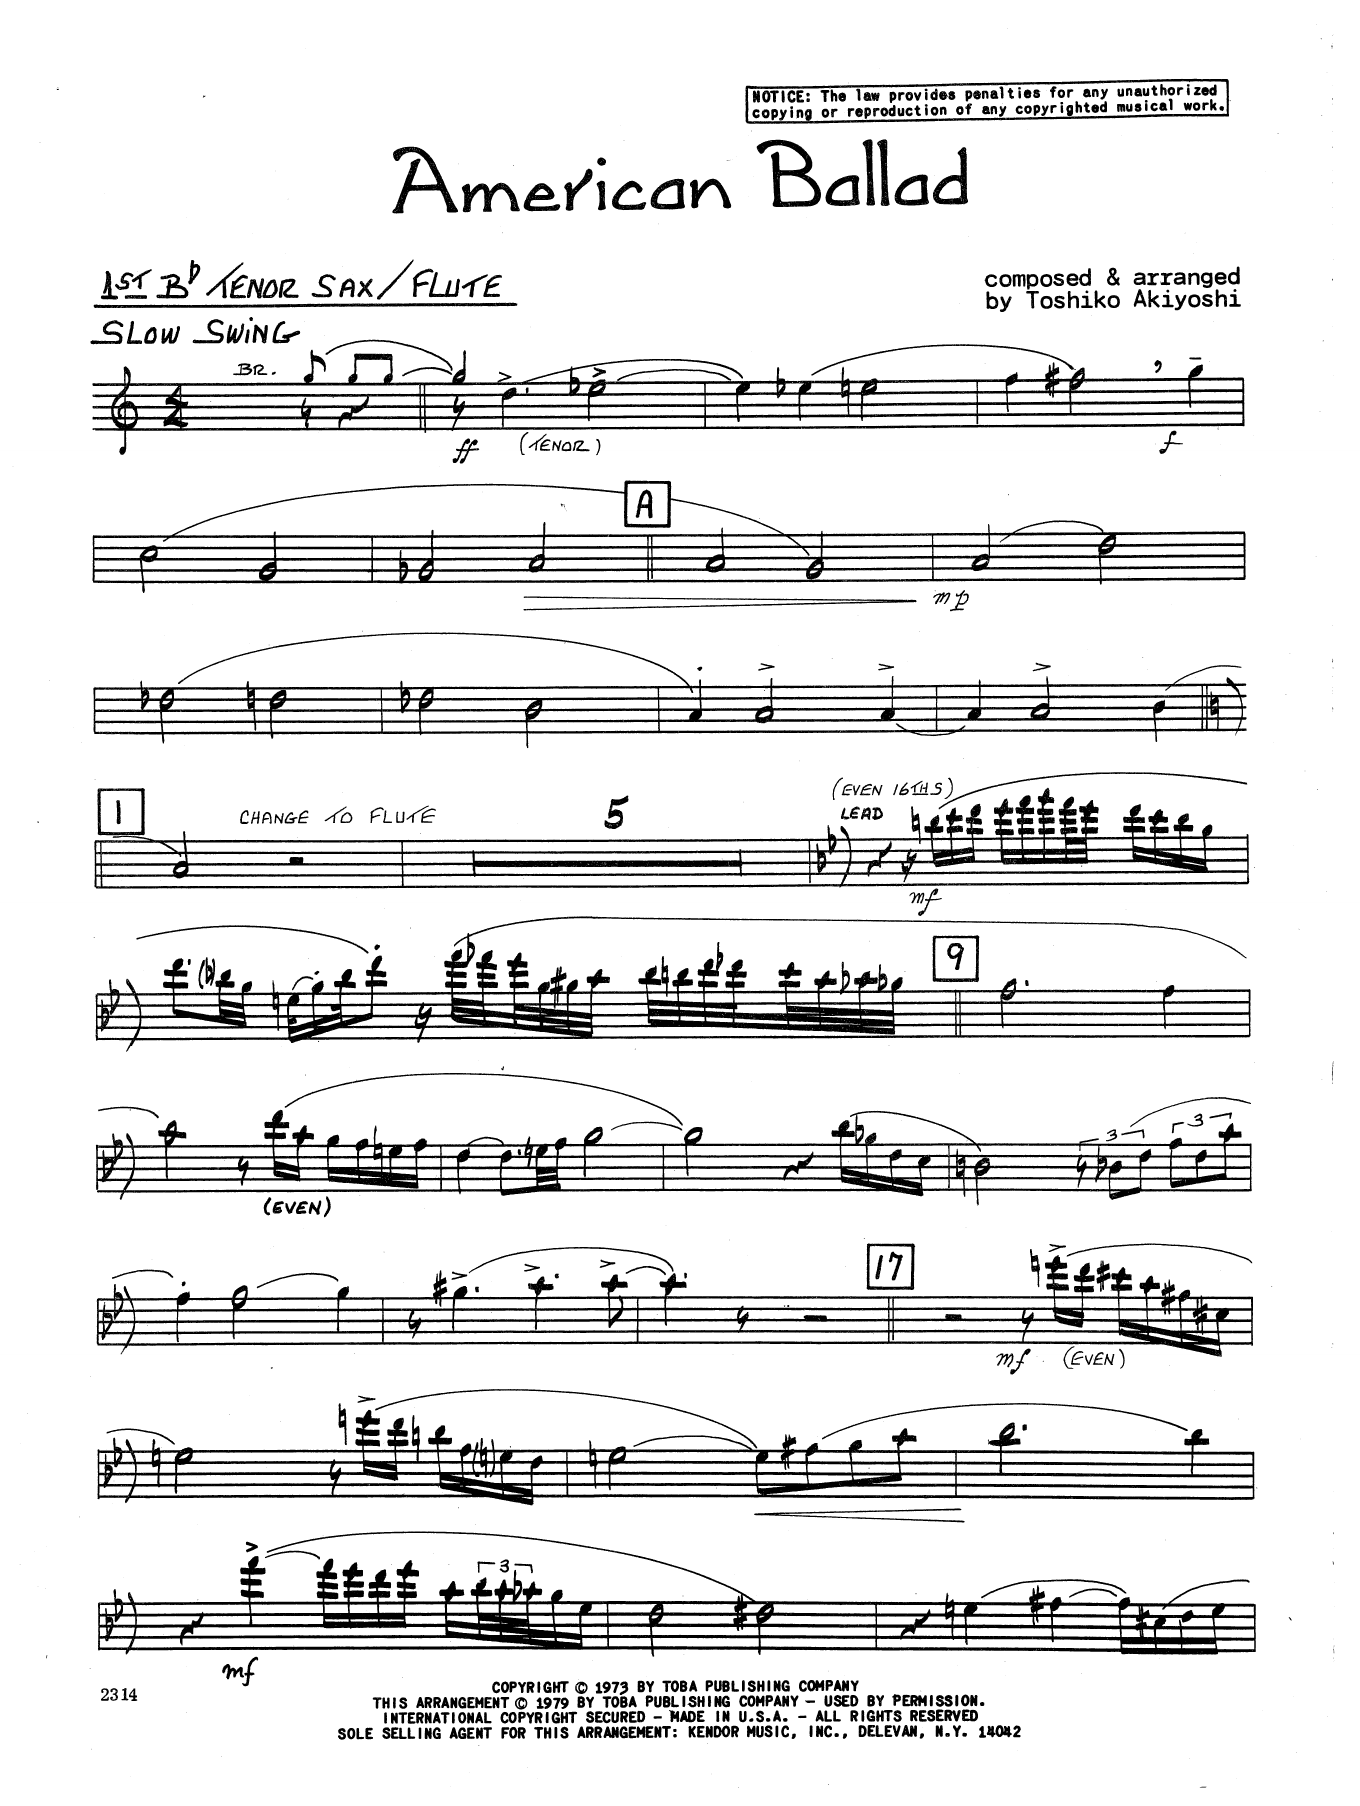 Download Toshiko Akiyoshi American Ballad - 1st Tenor Saxophone Sheet Music